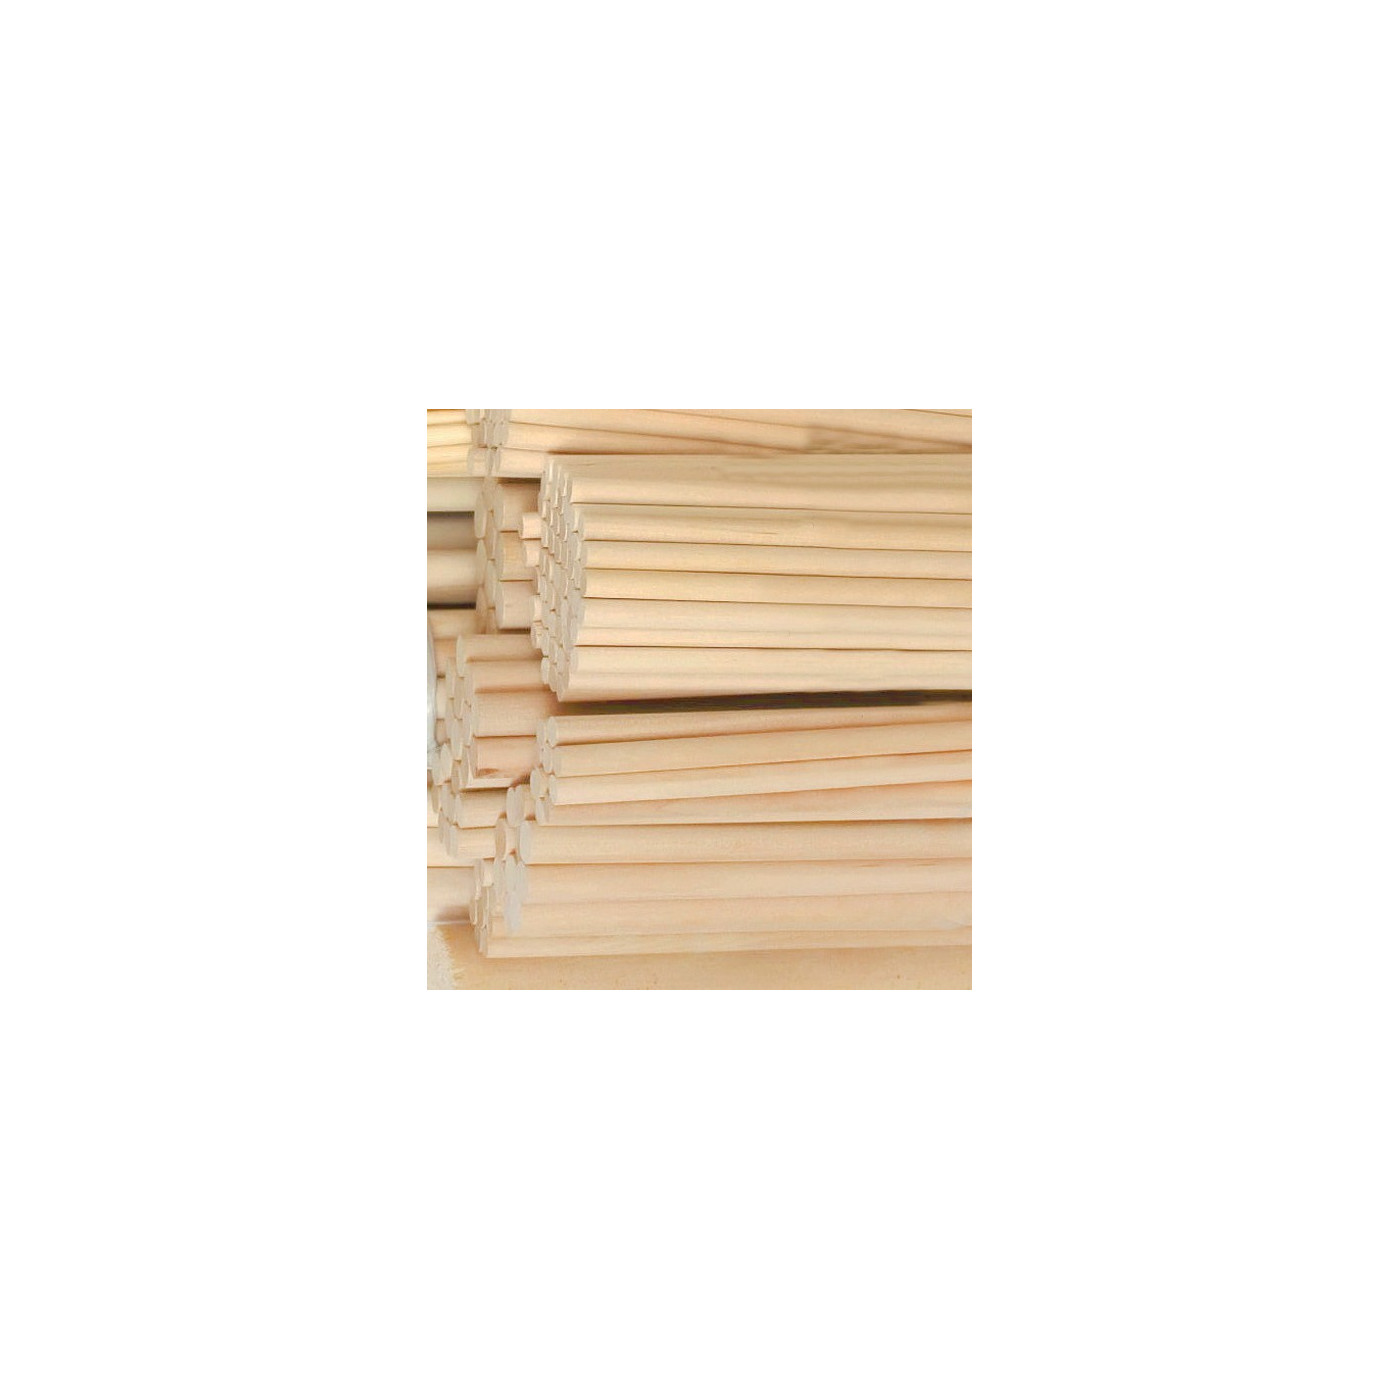 Set of 100 wooden sticks (20 cm length, 9.5 mm dia, birchwood)